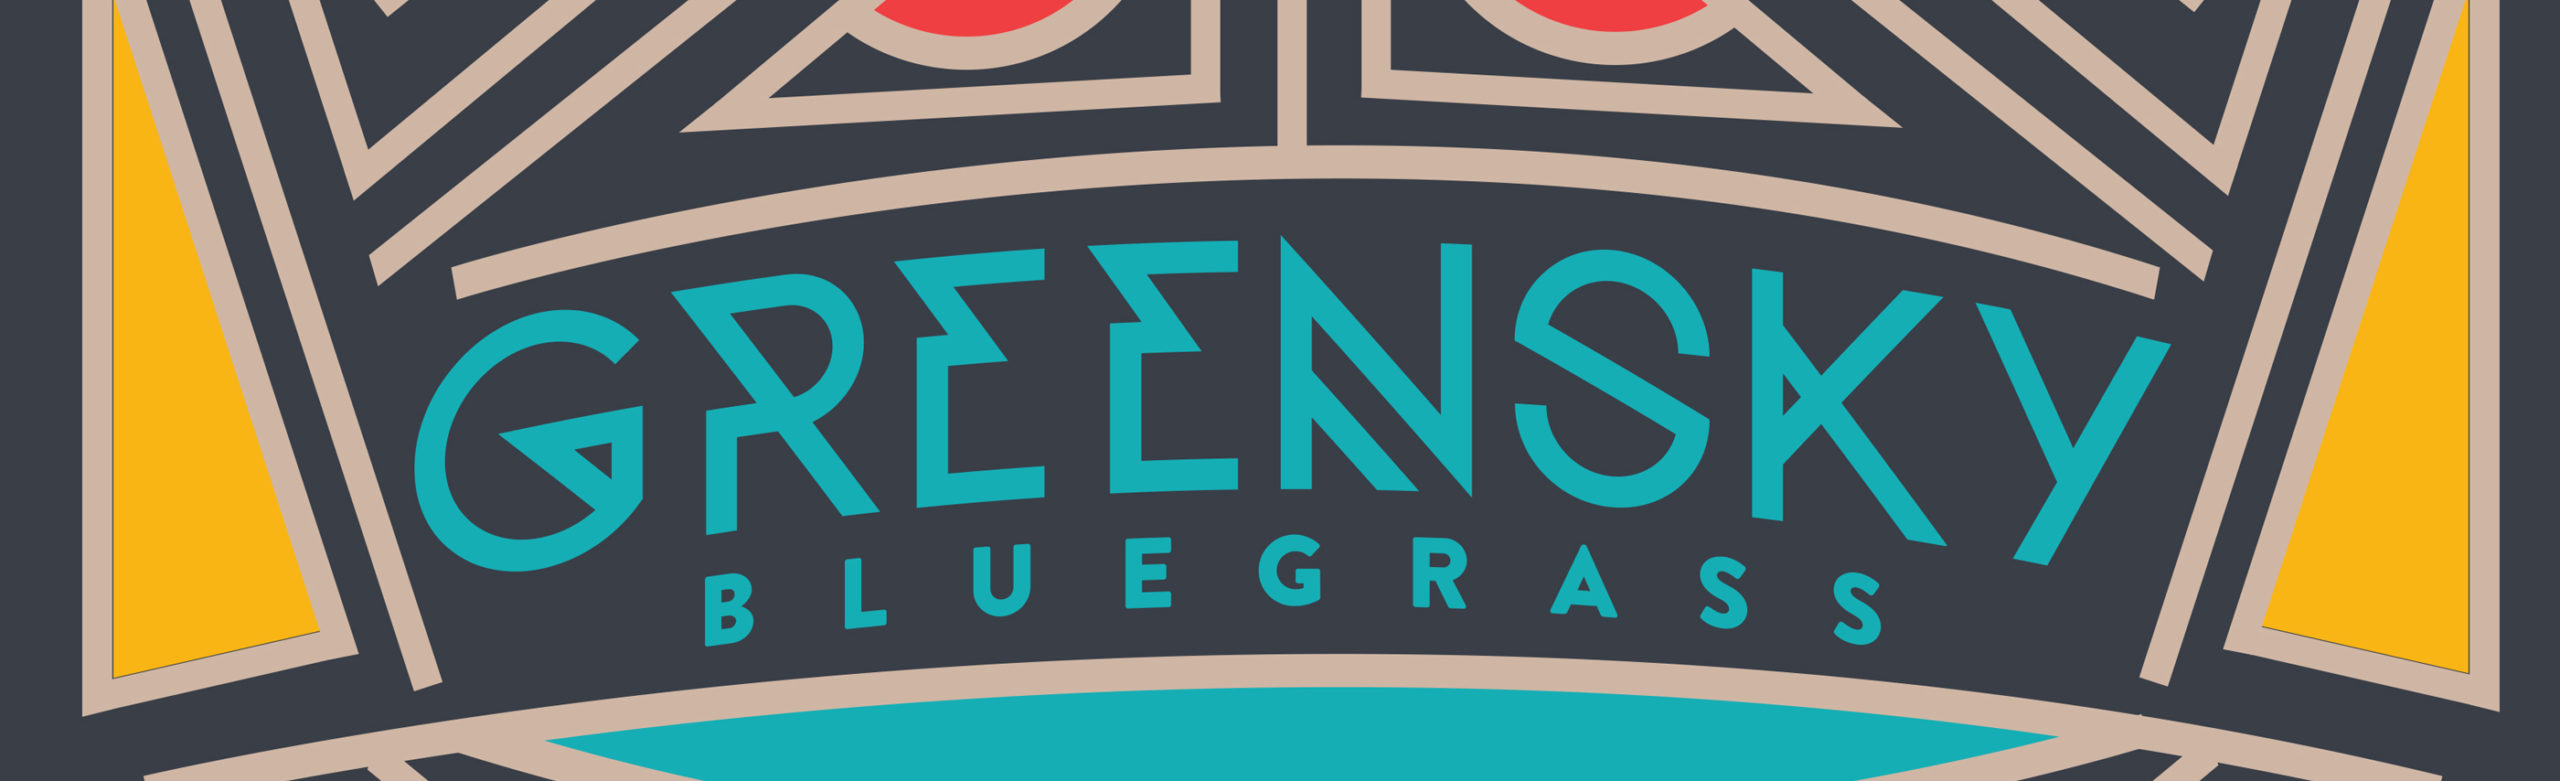 Greensky Bluegrass CD + Ticket Giveaway Image